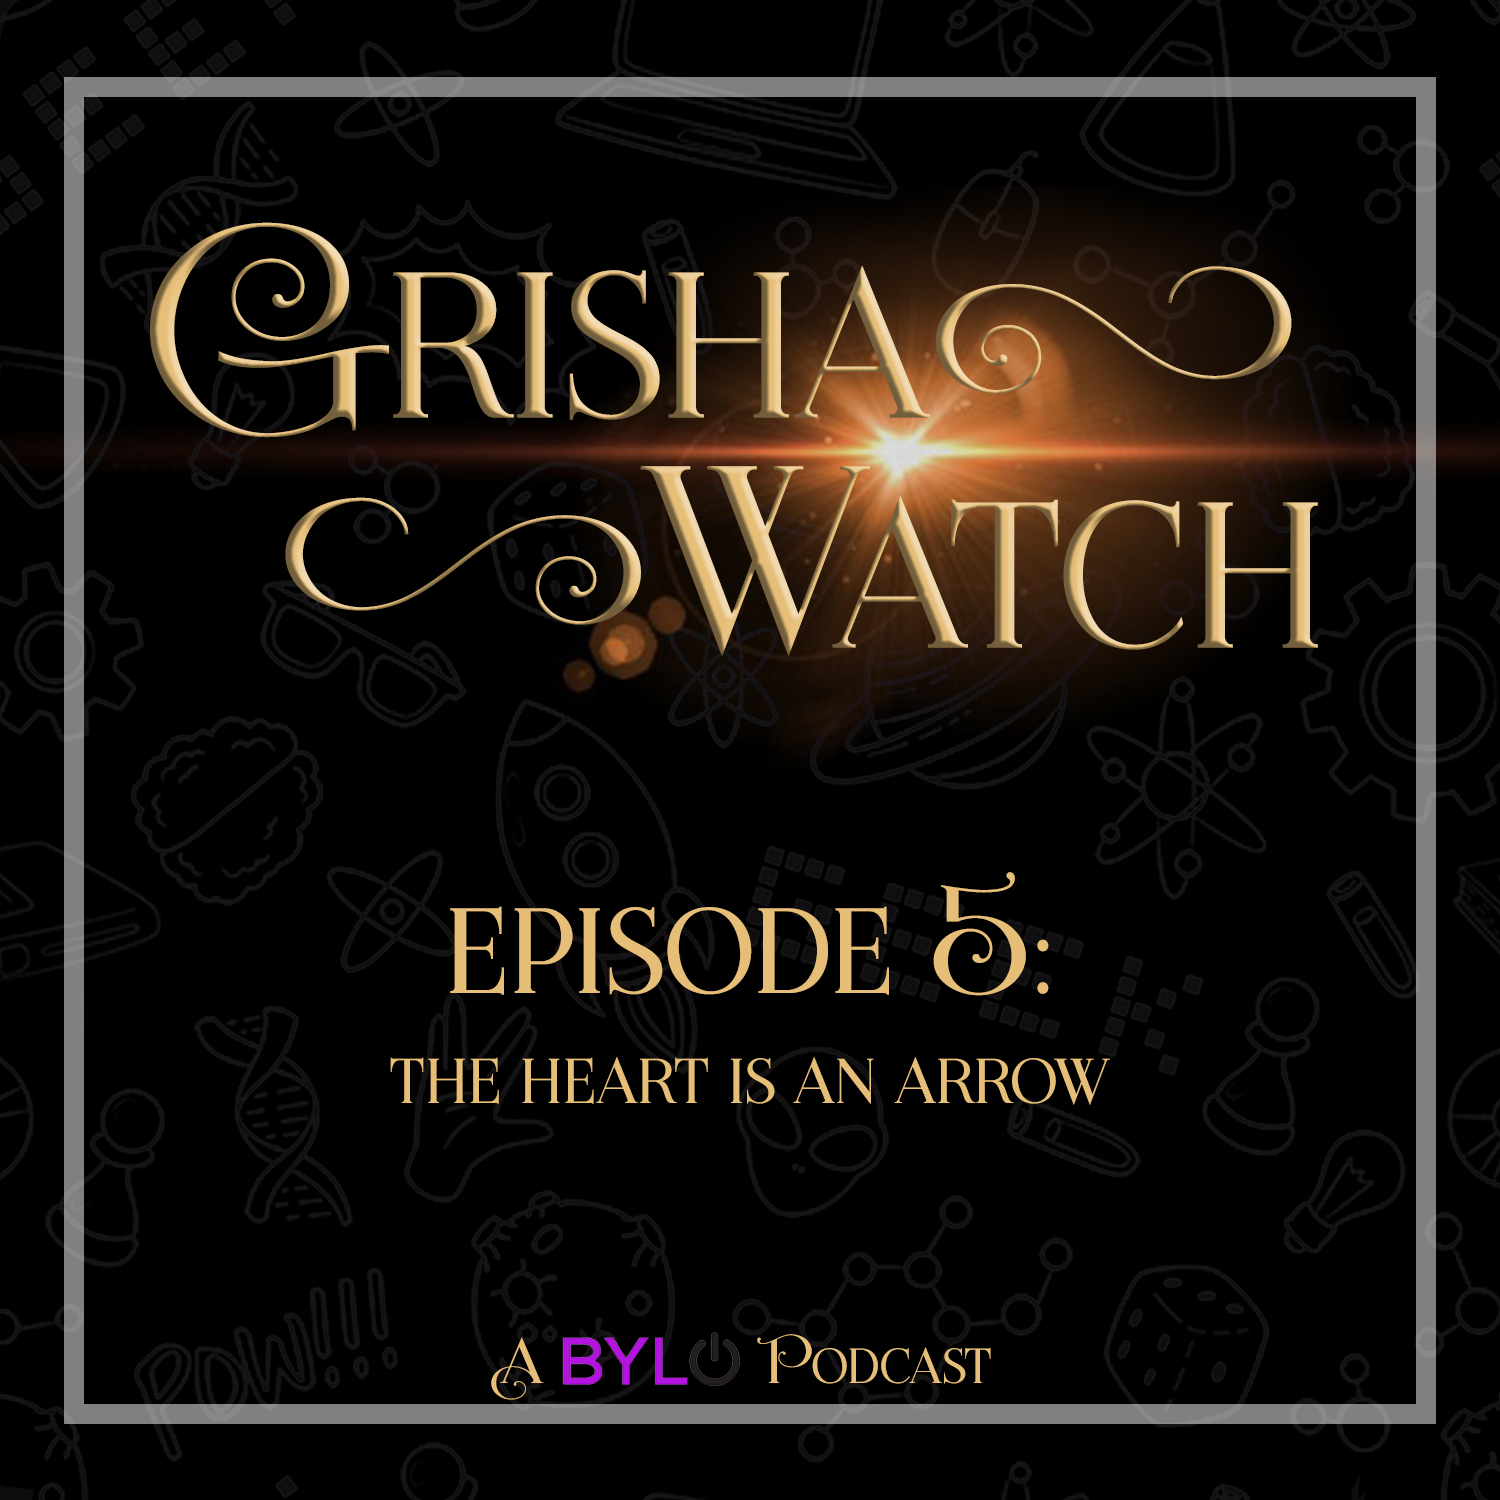 Grisha Watch ep 05: "The Heart is an Arrow"